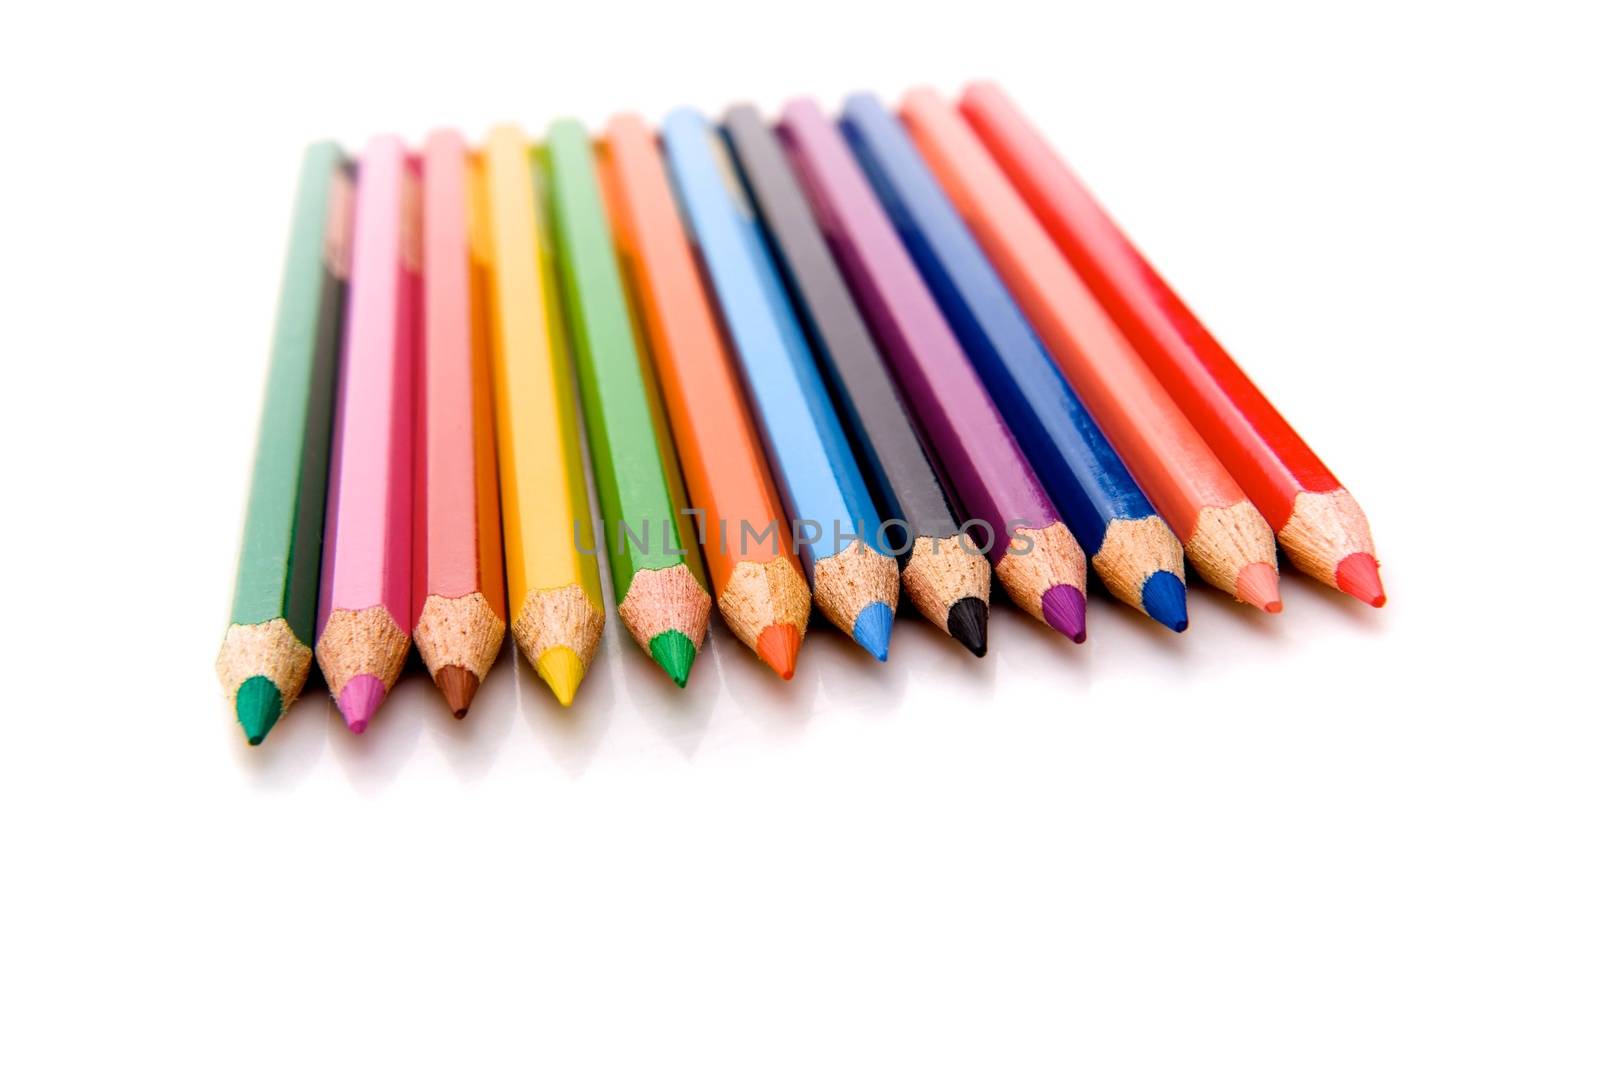 Isolated on the white background horizontal shot of twelve sloped colored pencils